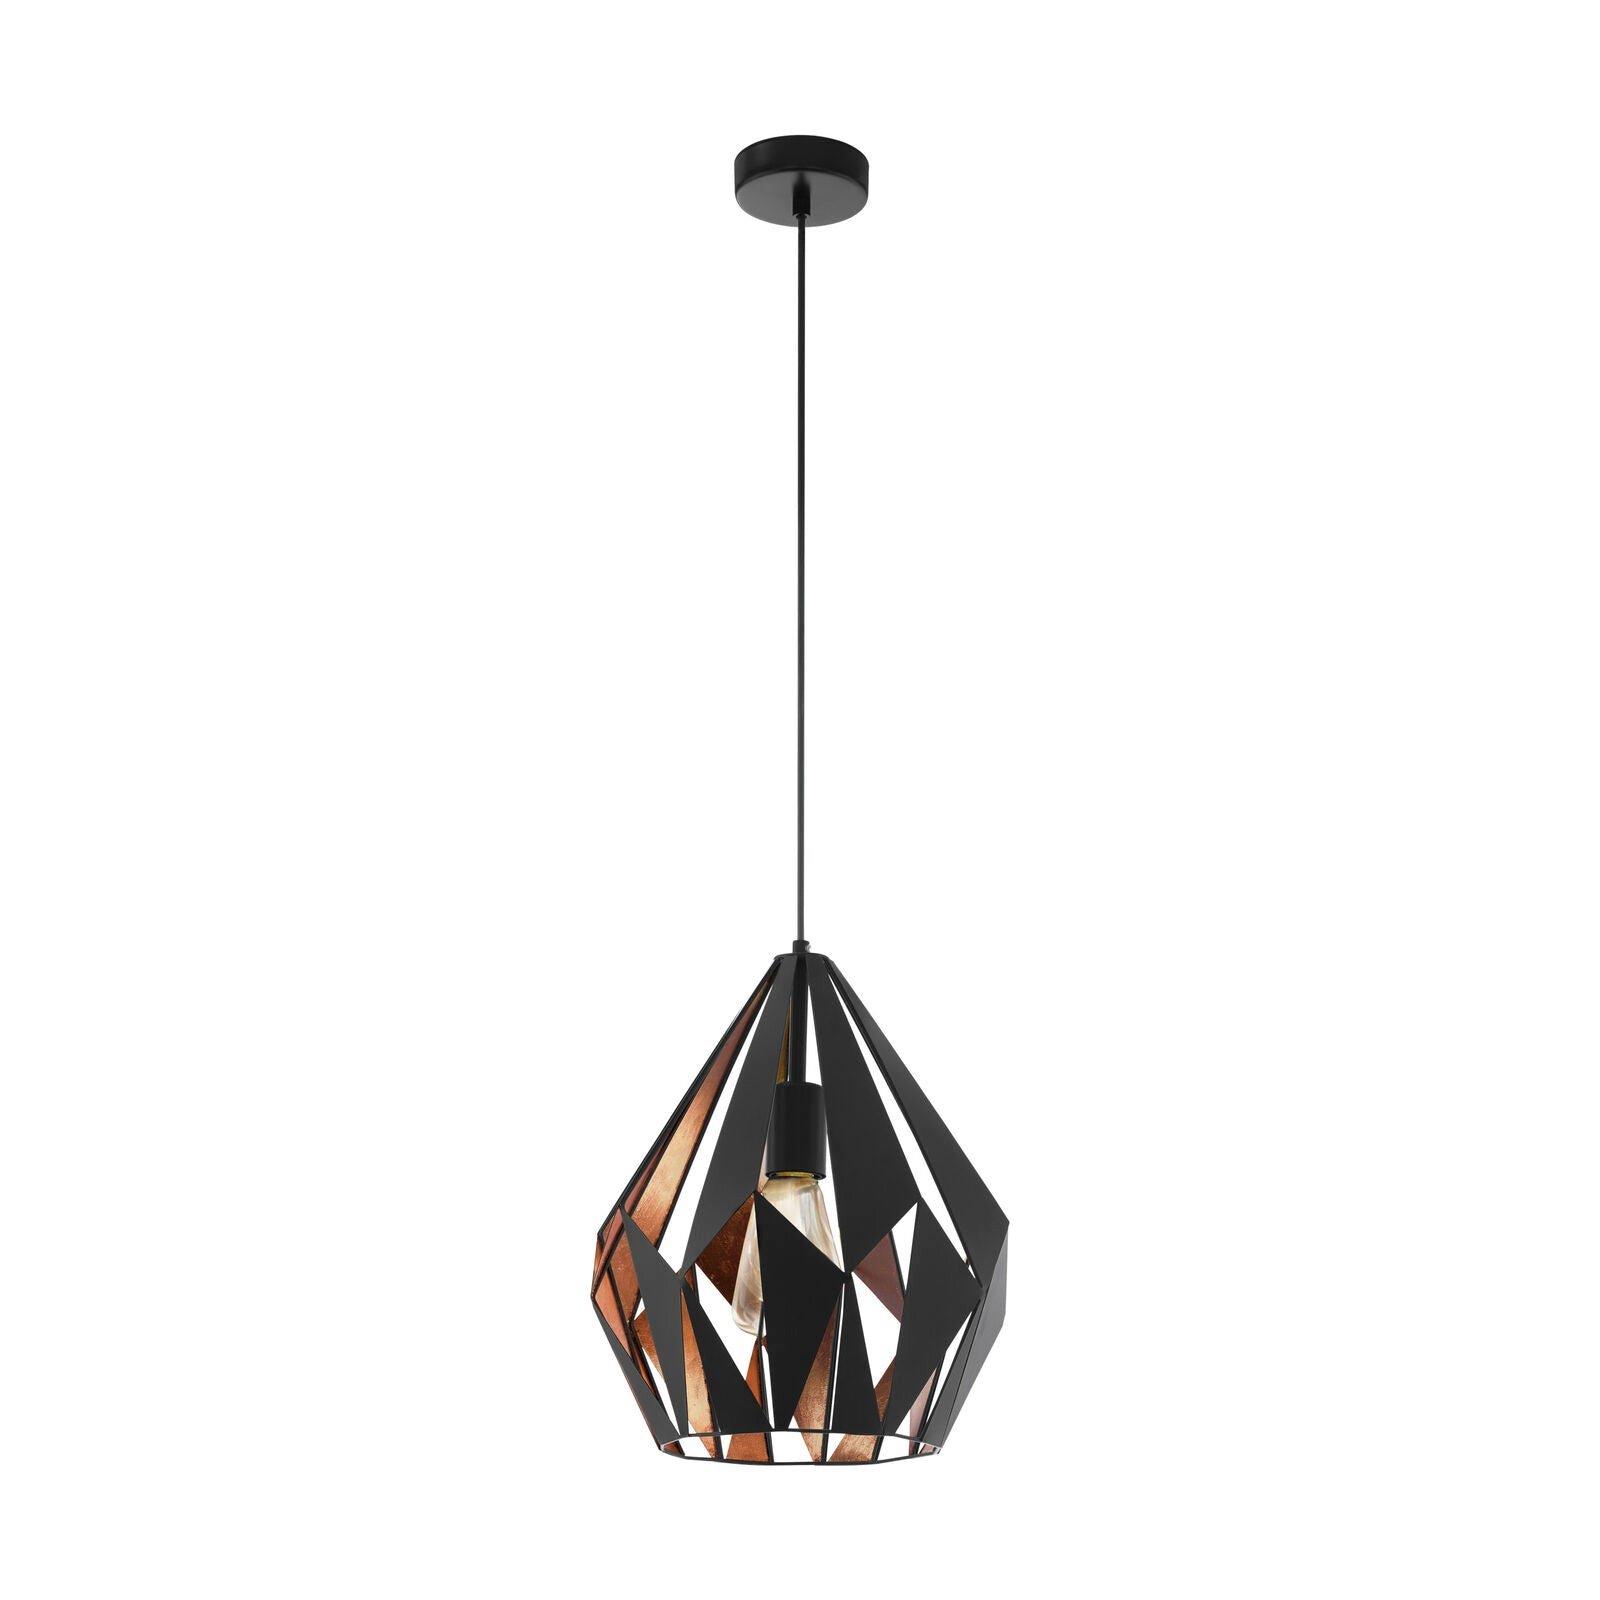 Hanging Ceiling Pendant Light Black & Copper Geometric 1x 60W E27 Feature Lamp